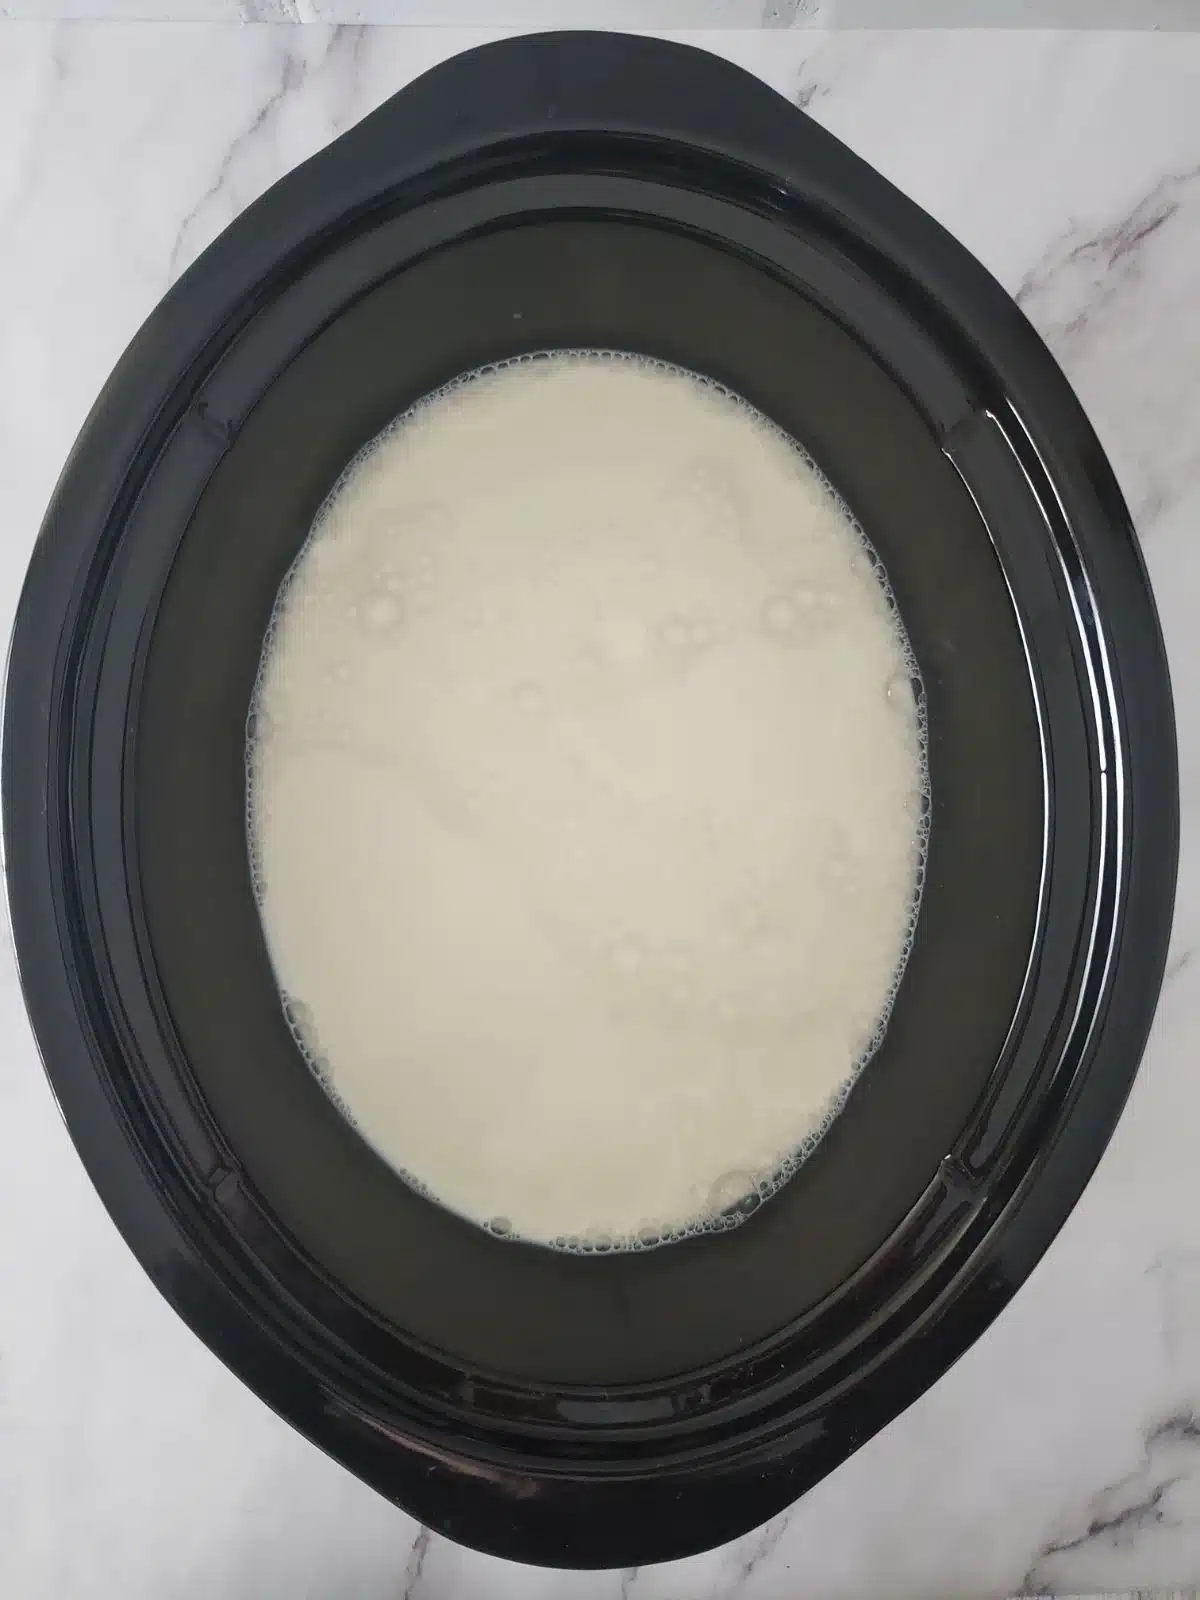 Milk in crock pot for homemade yogurt.